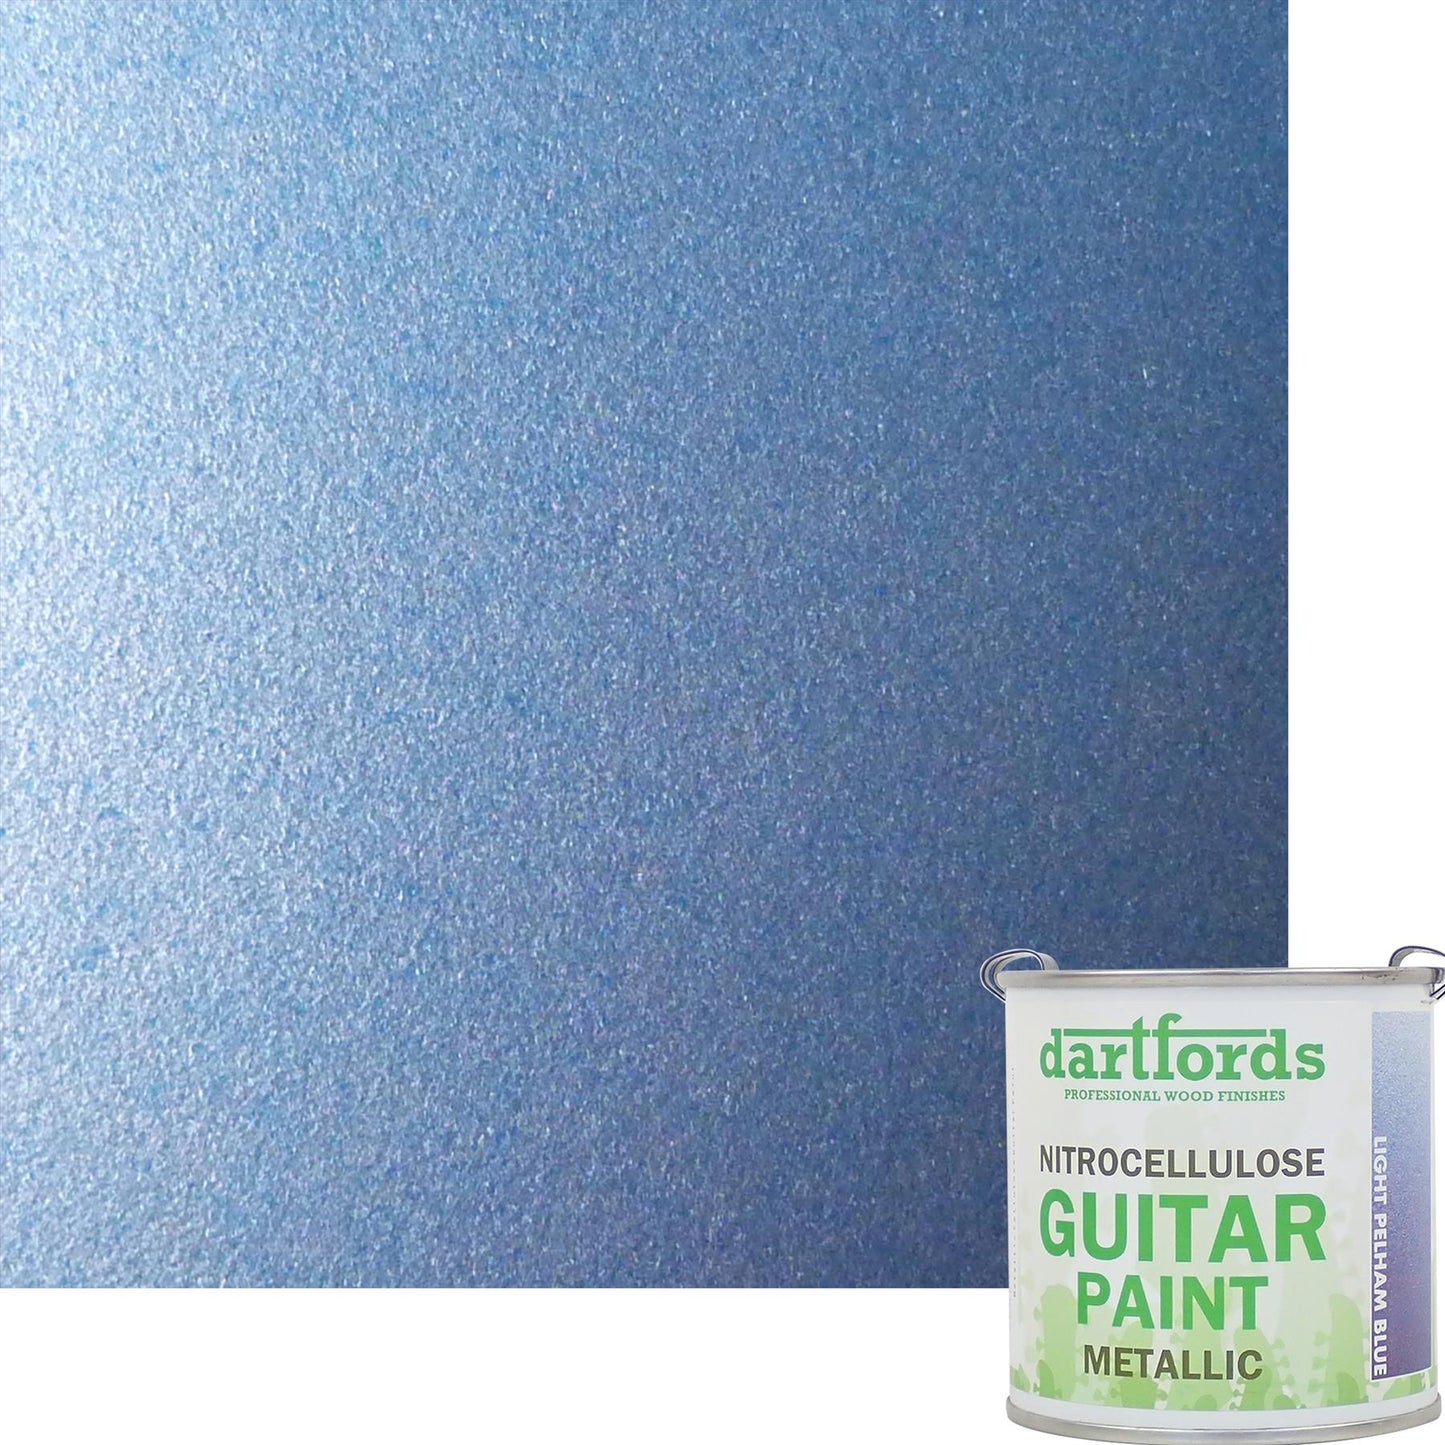 dartfords Pelham Light Blue Metallic Nitrocellulose Guitar Paint - 230ml Tin